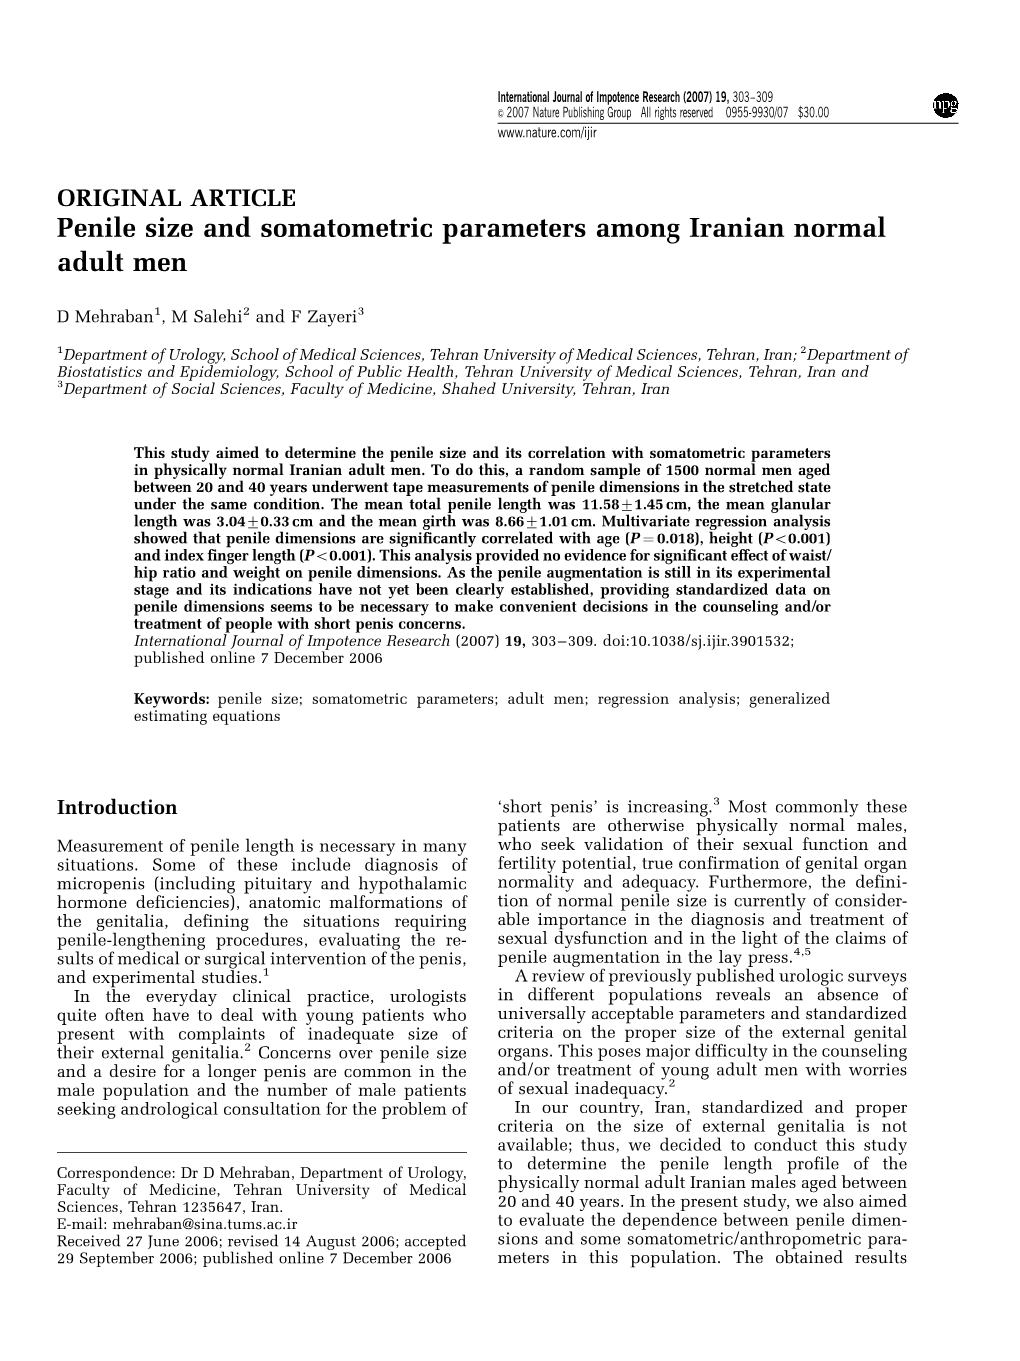 Penile Size and Somatometric Parameters Among Iranian Normal Adult Men